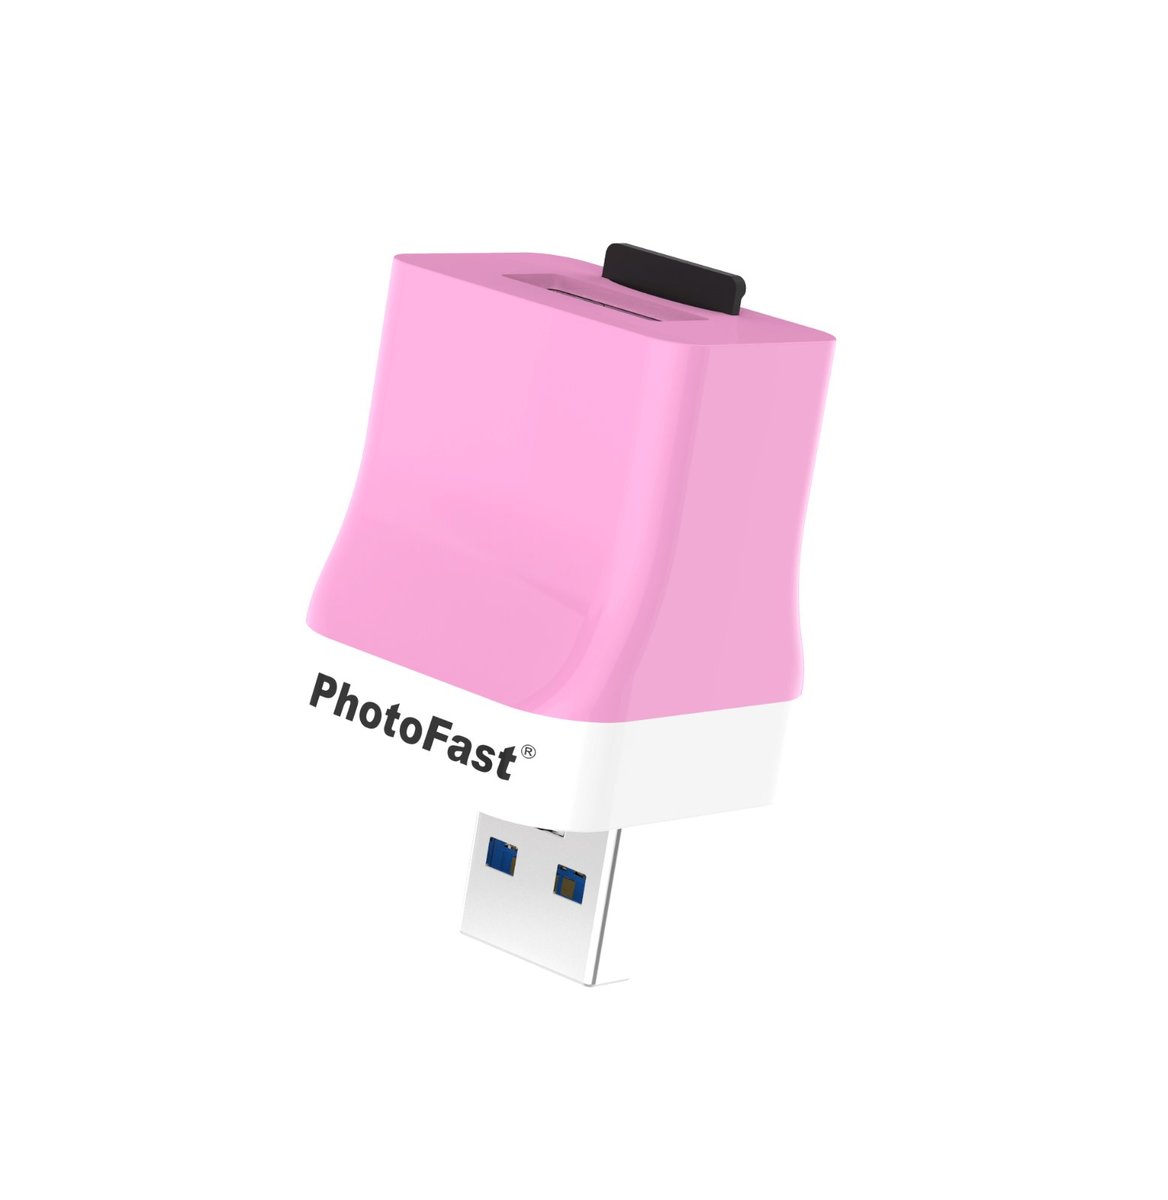 PhotoFast - PhotoCube Backup Cube - White [Licensed in Hong Kong]